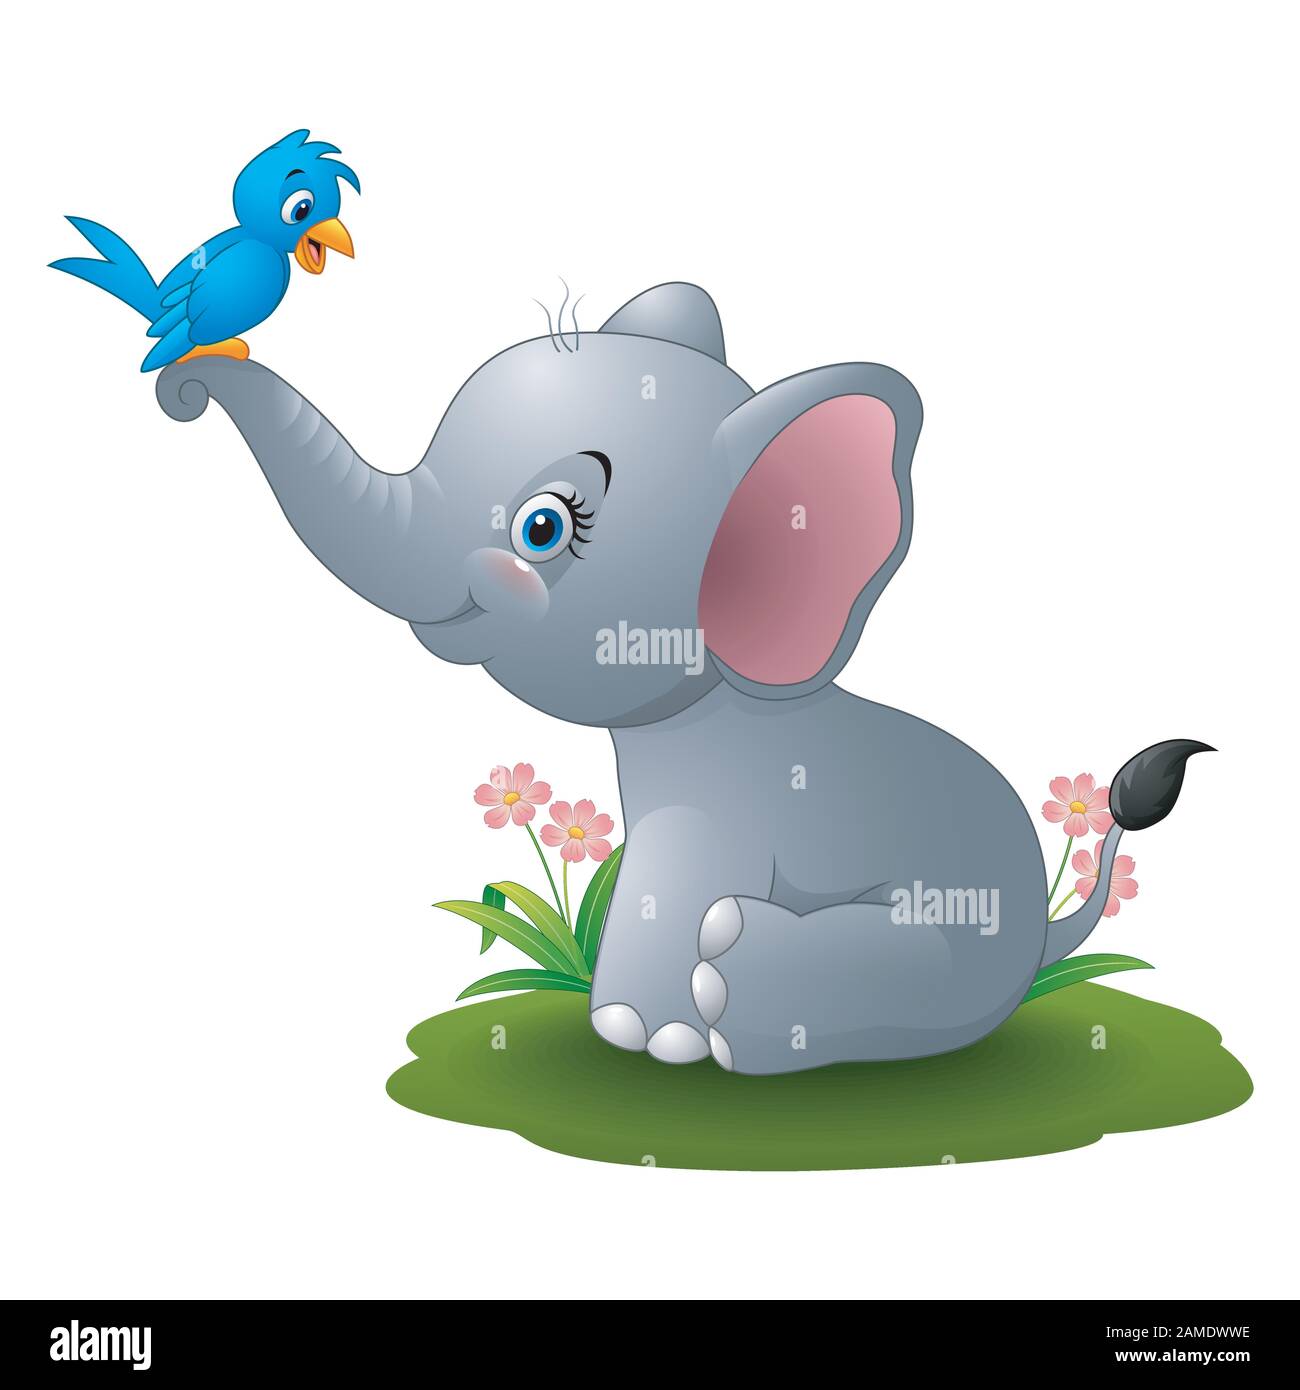 Cartoon baby elephant playing with blue bird Stock Vector Image ...